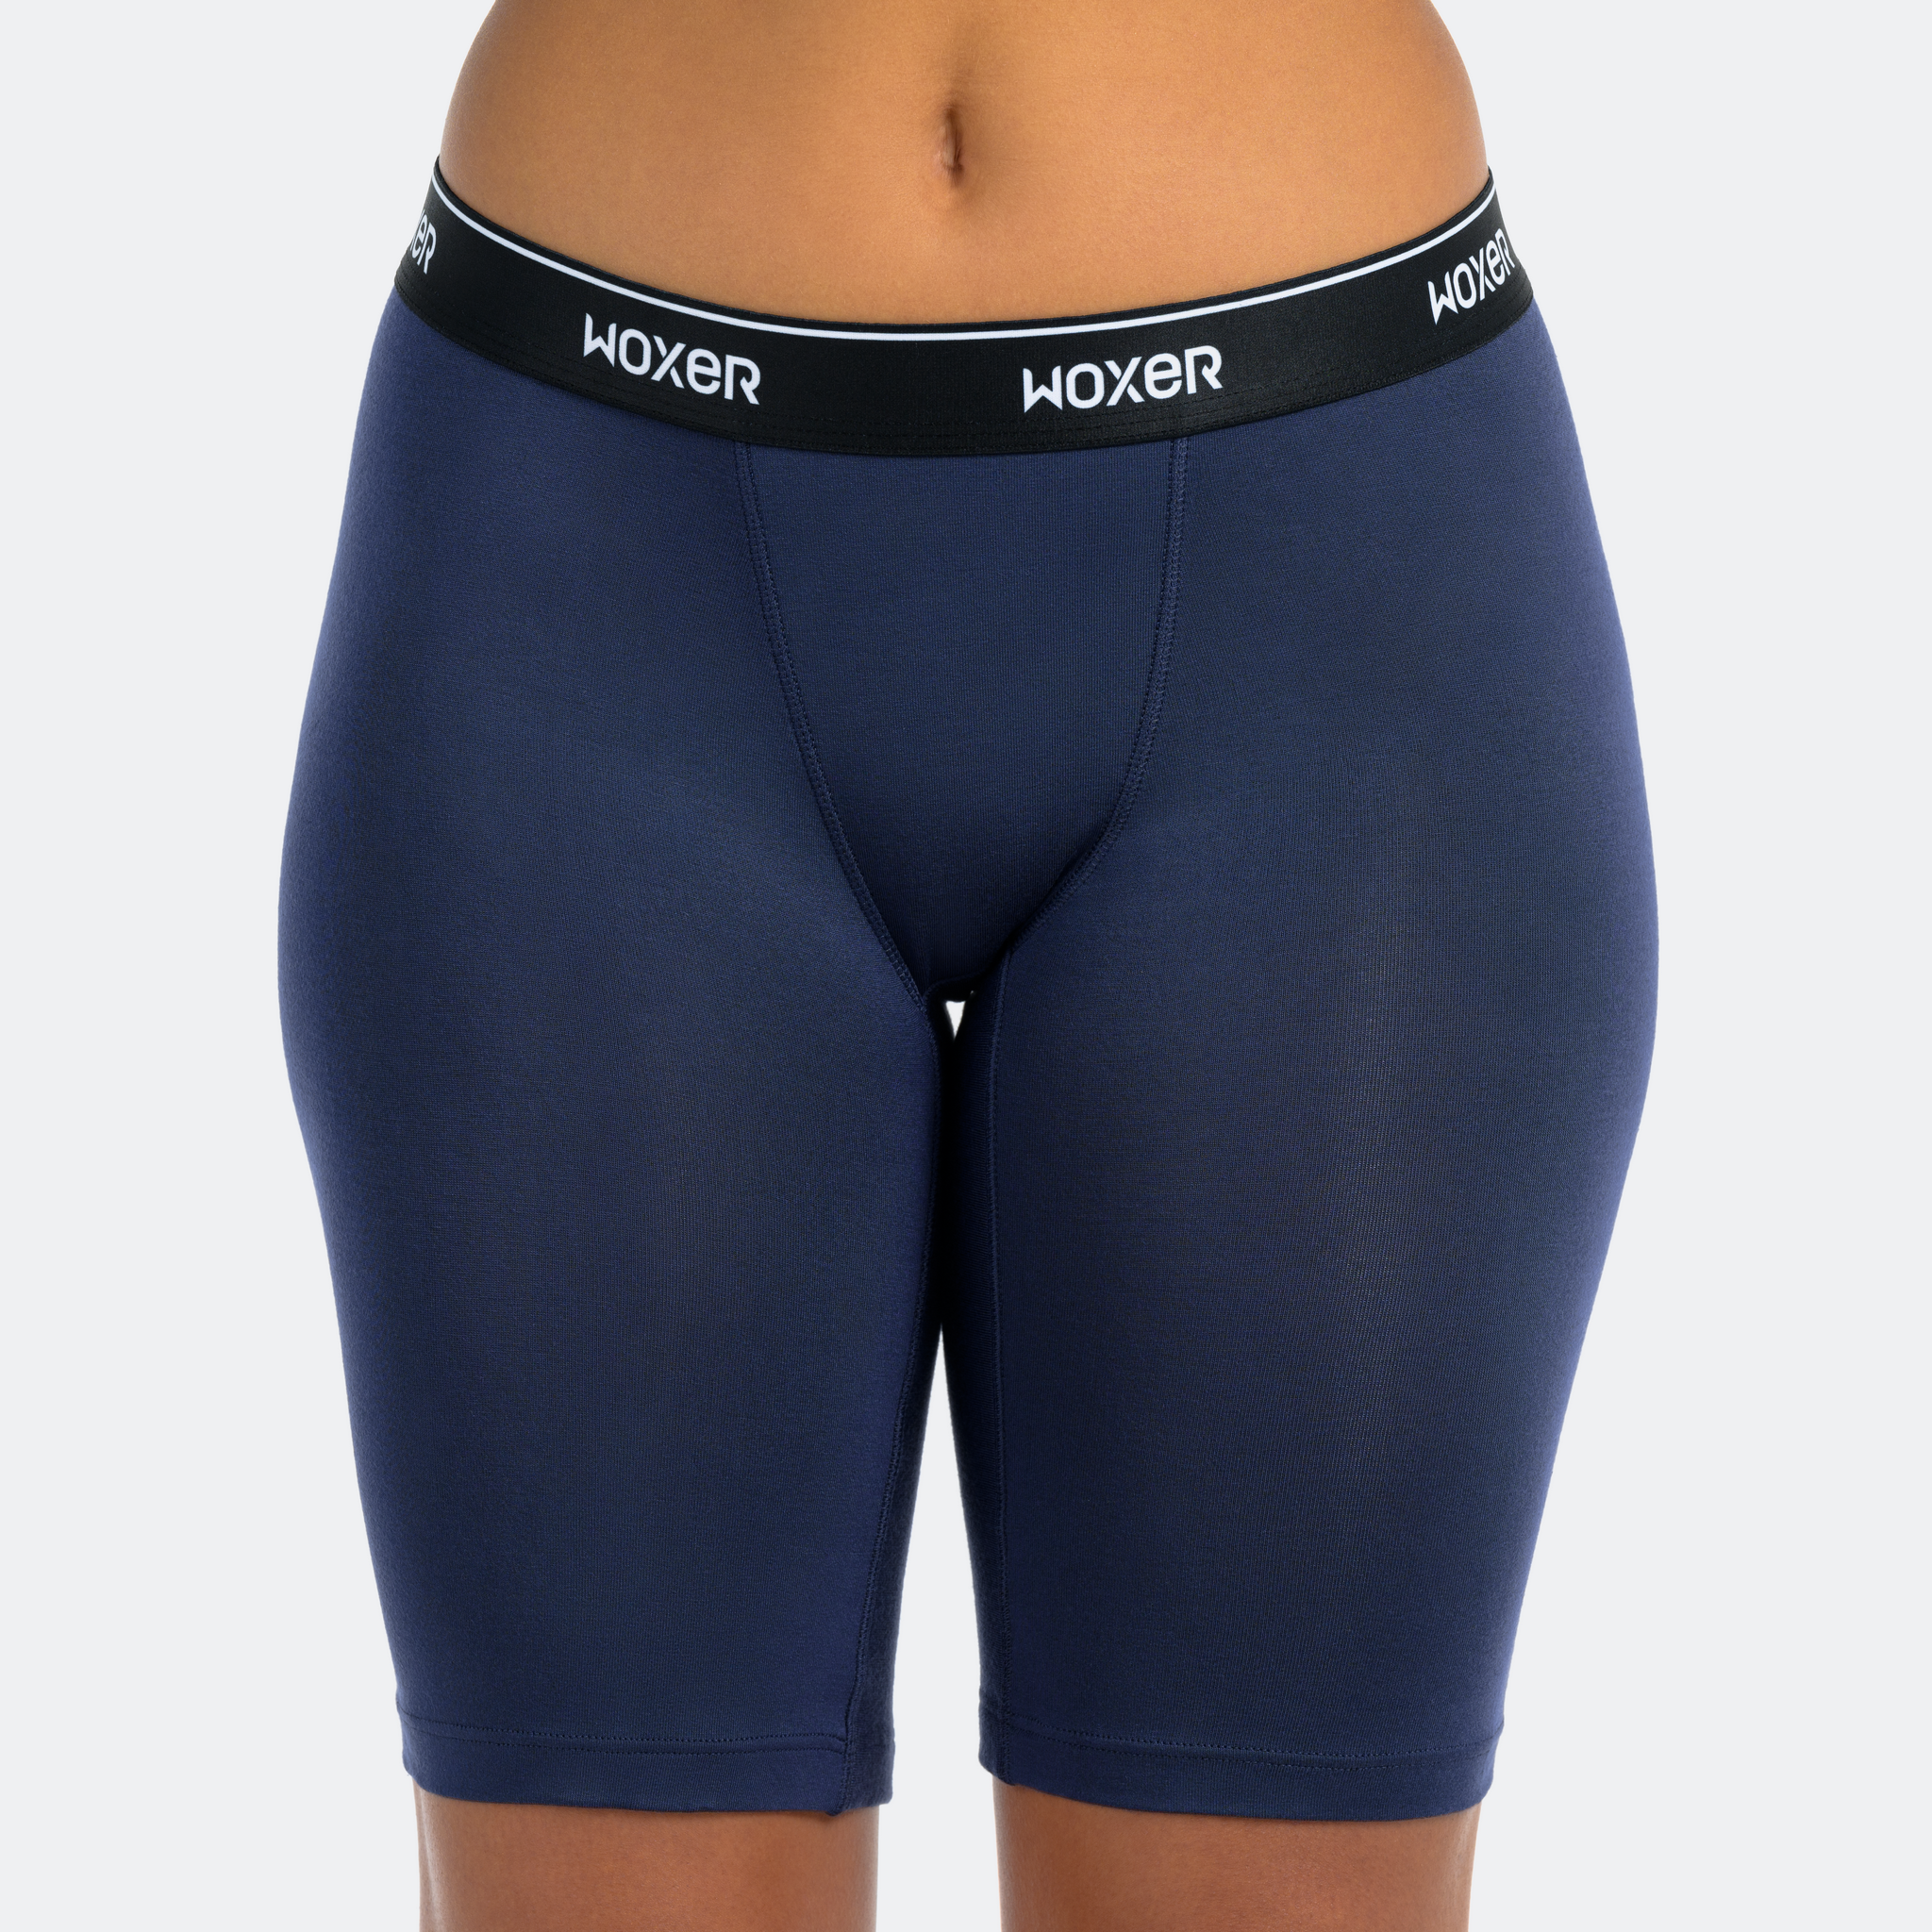 Woxer Women's Boxer Briefs Underwear, Biker 9” Boyshorts, Exercise Shorts  Soft, Panties, Chafing-Free, No Roll Inseam